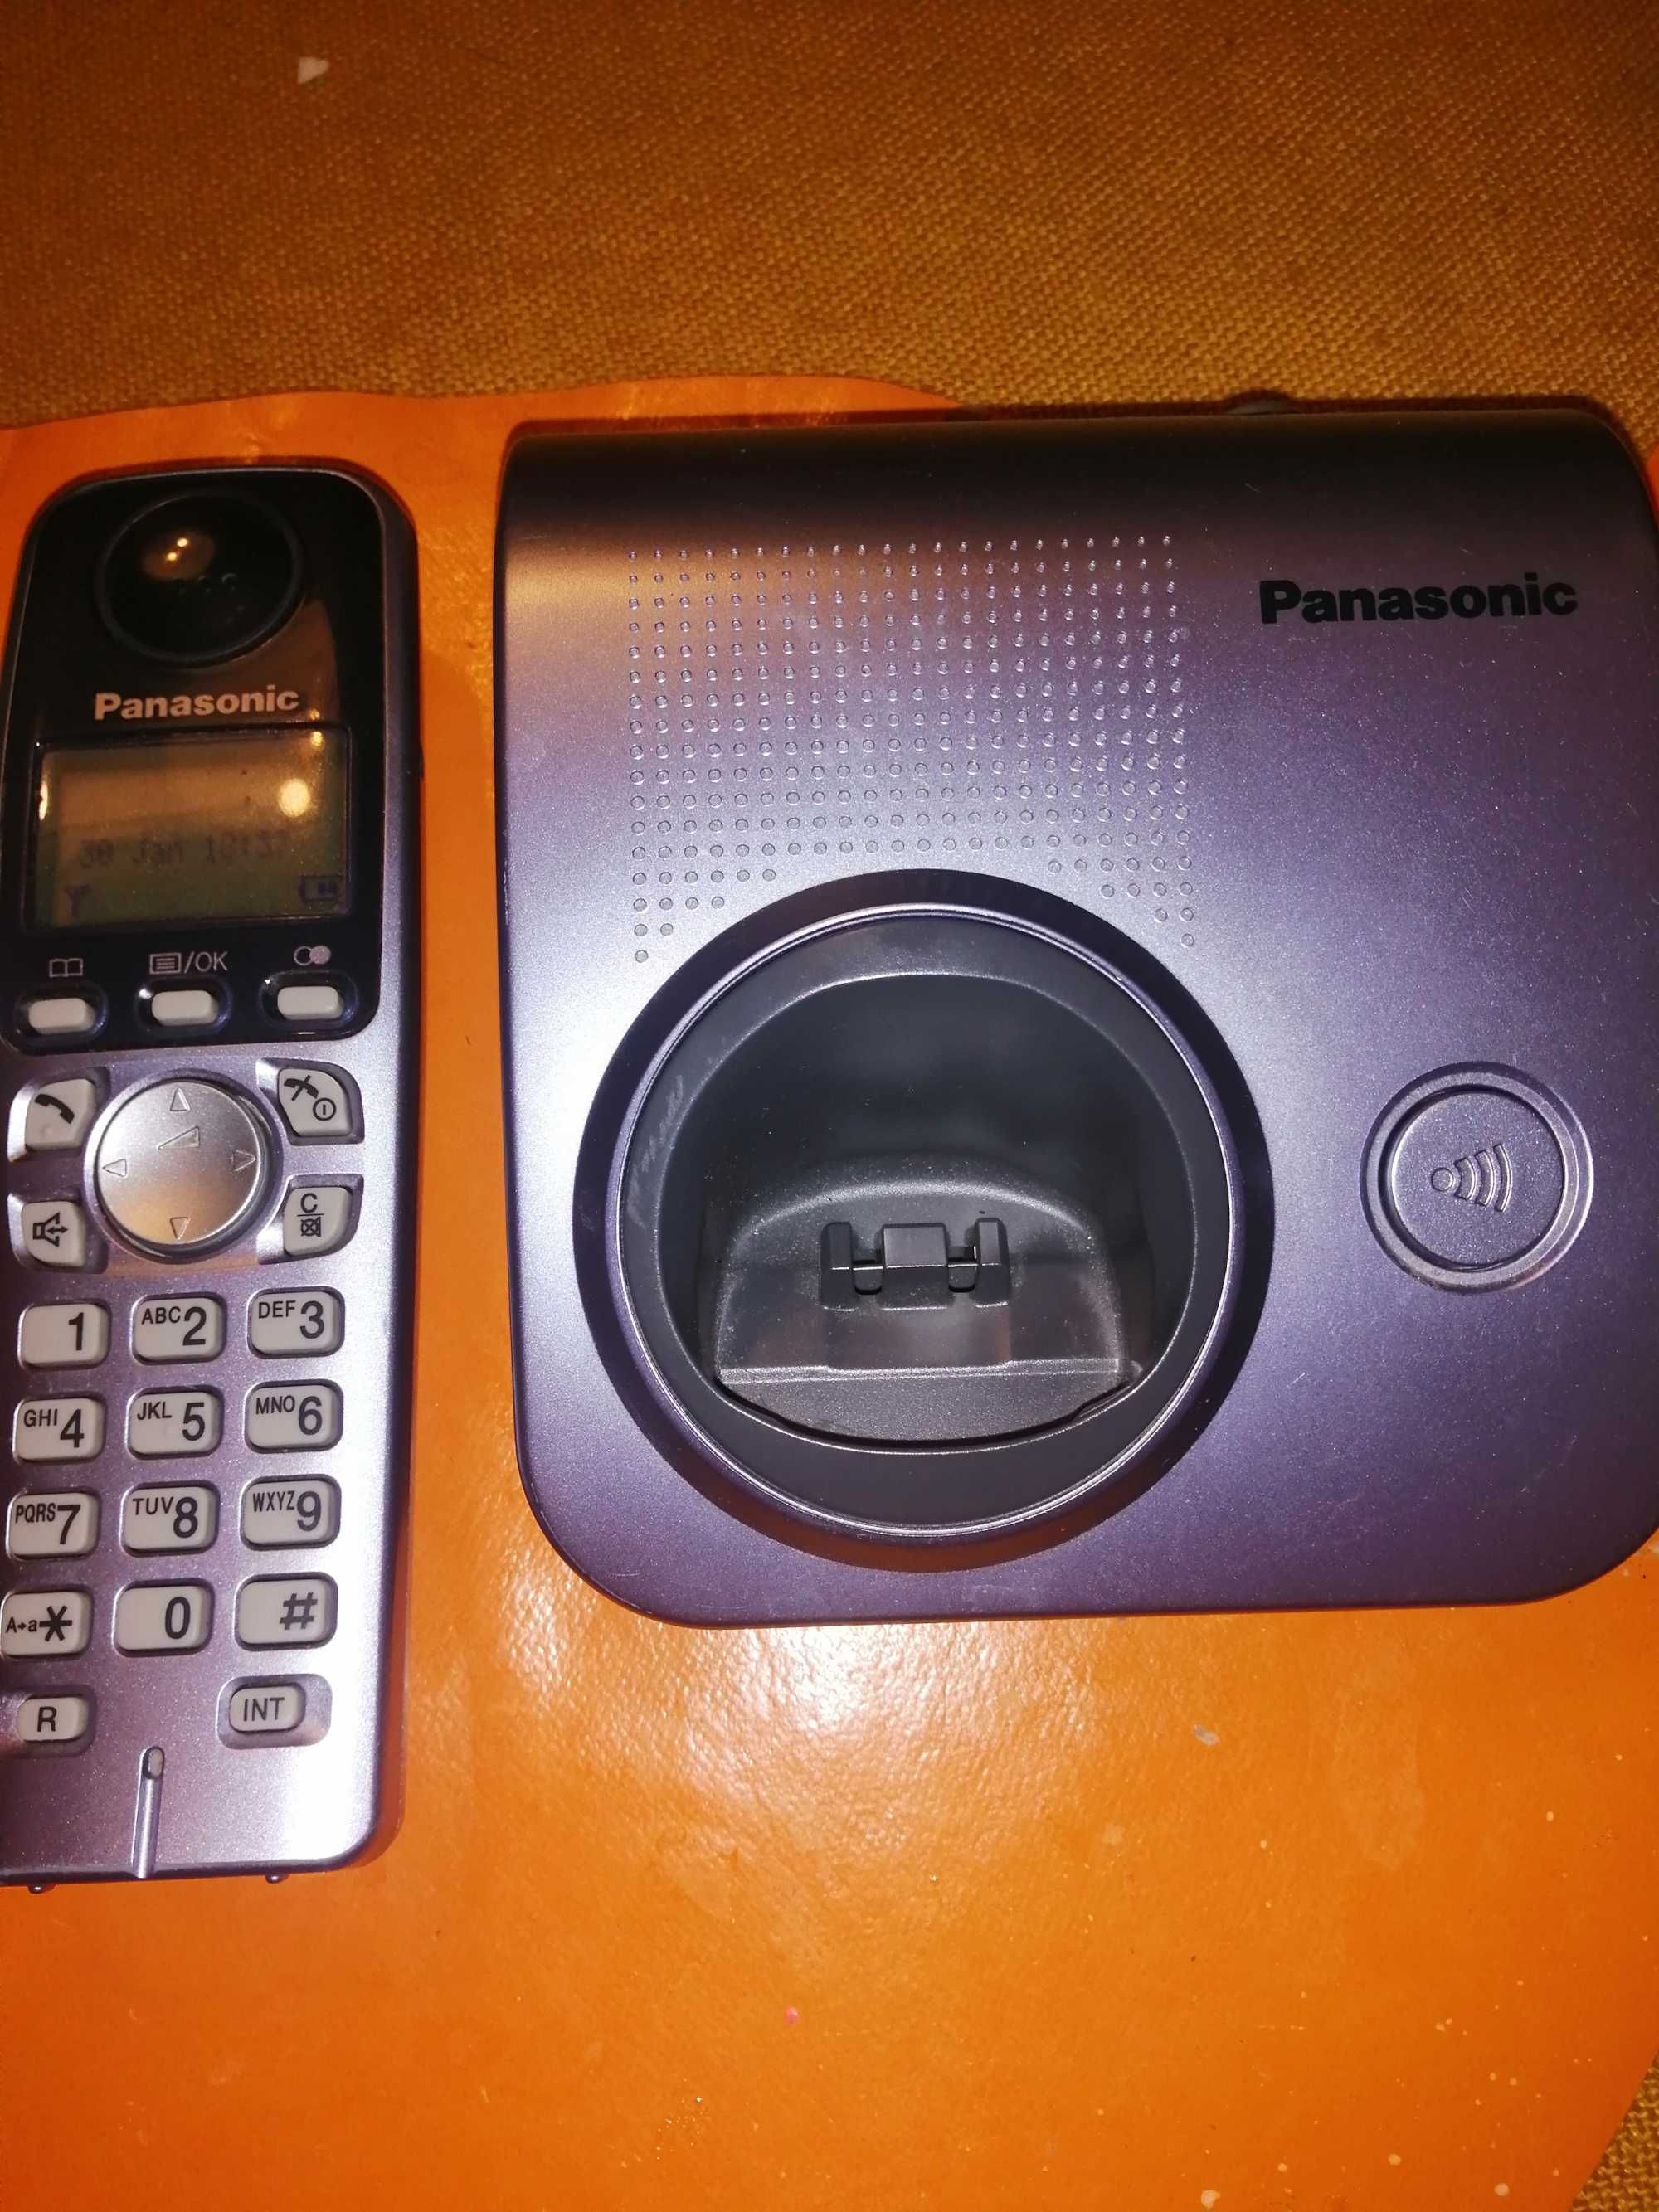 Telefon bezprzewodowy Panasonic KX-TG7200G